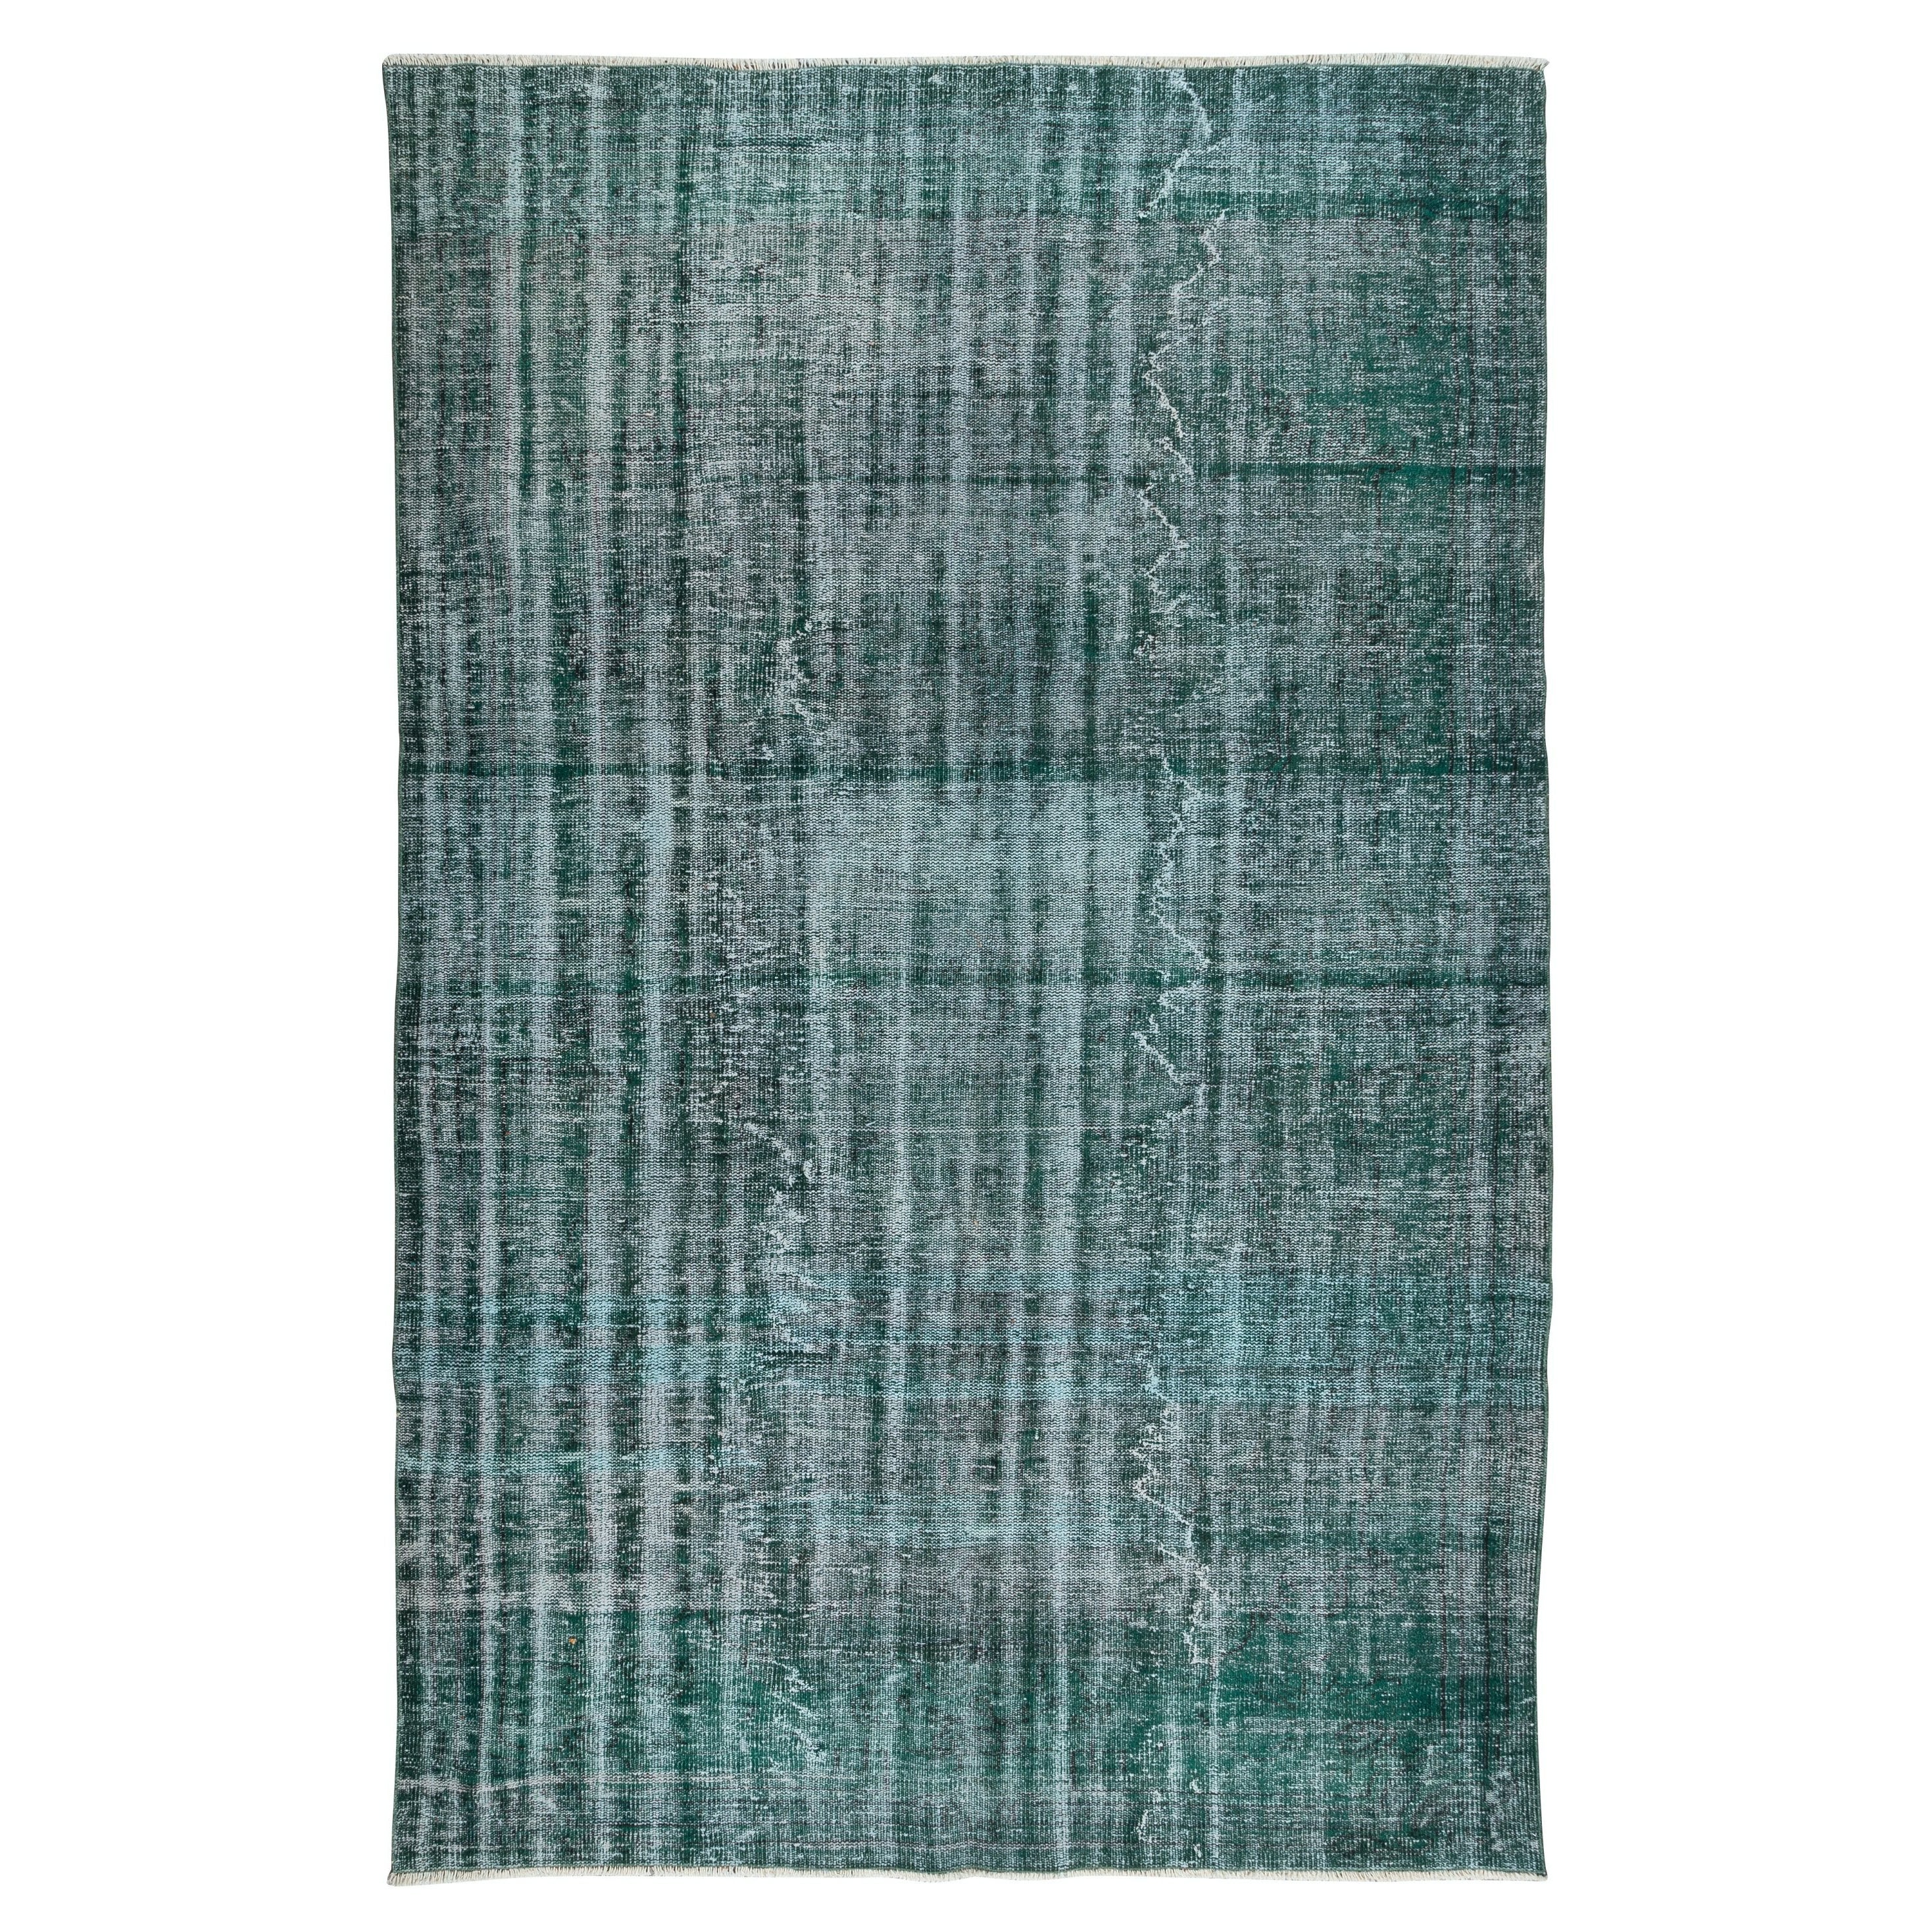 6.3x9.5 Ft Distressed Look Dark Green Rug, Handmade Turkish Shabby Chic Carpet (tapis turc de style shabby chic)